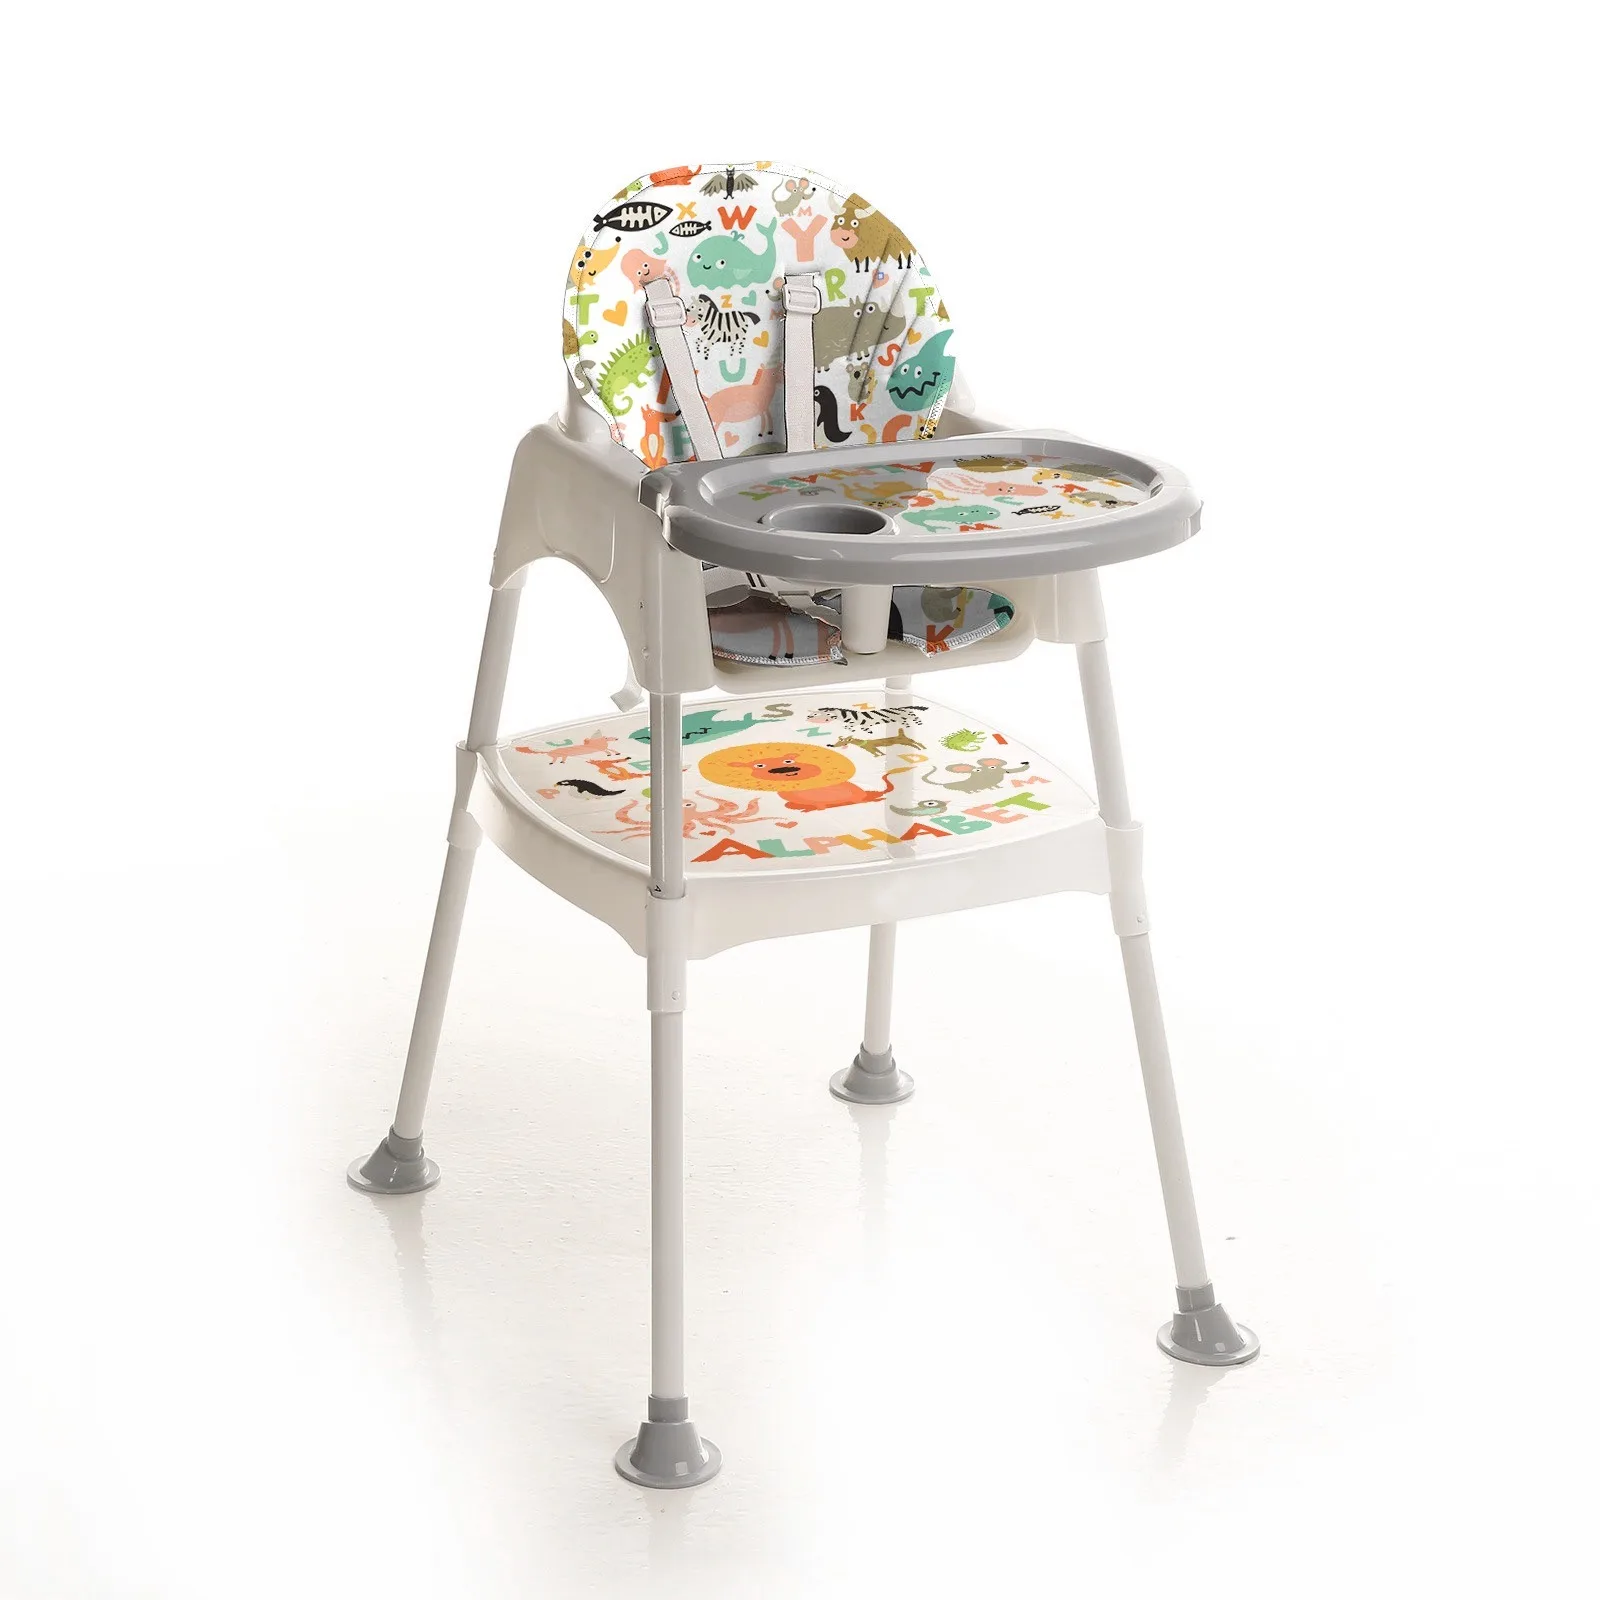 
Multifunctional High Chair Baby Feeding 3 in 1 High Chair for Feeding made in Turkey  (1700000772583)